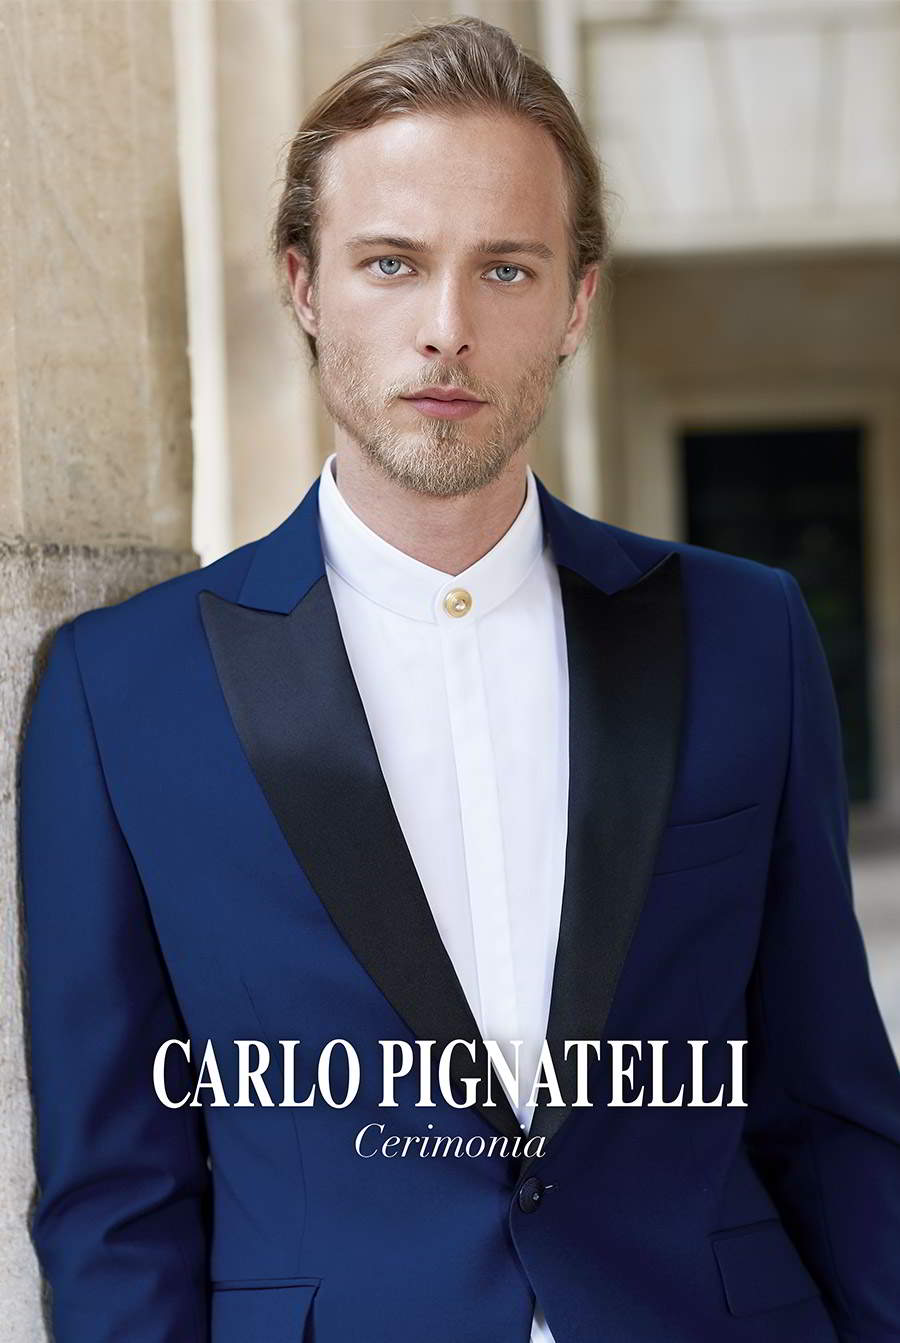 carlo pignatelli 2020 bridal cerimonia menswear navy dark tuxedo suit black contrast lapel stand collar shirt (15) mv